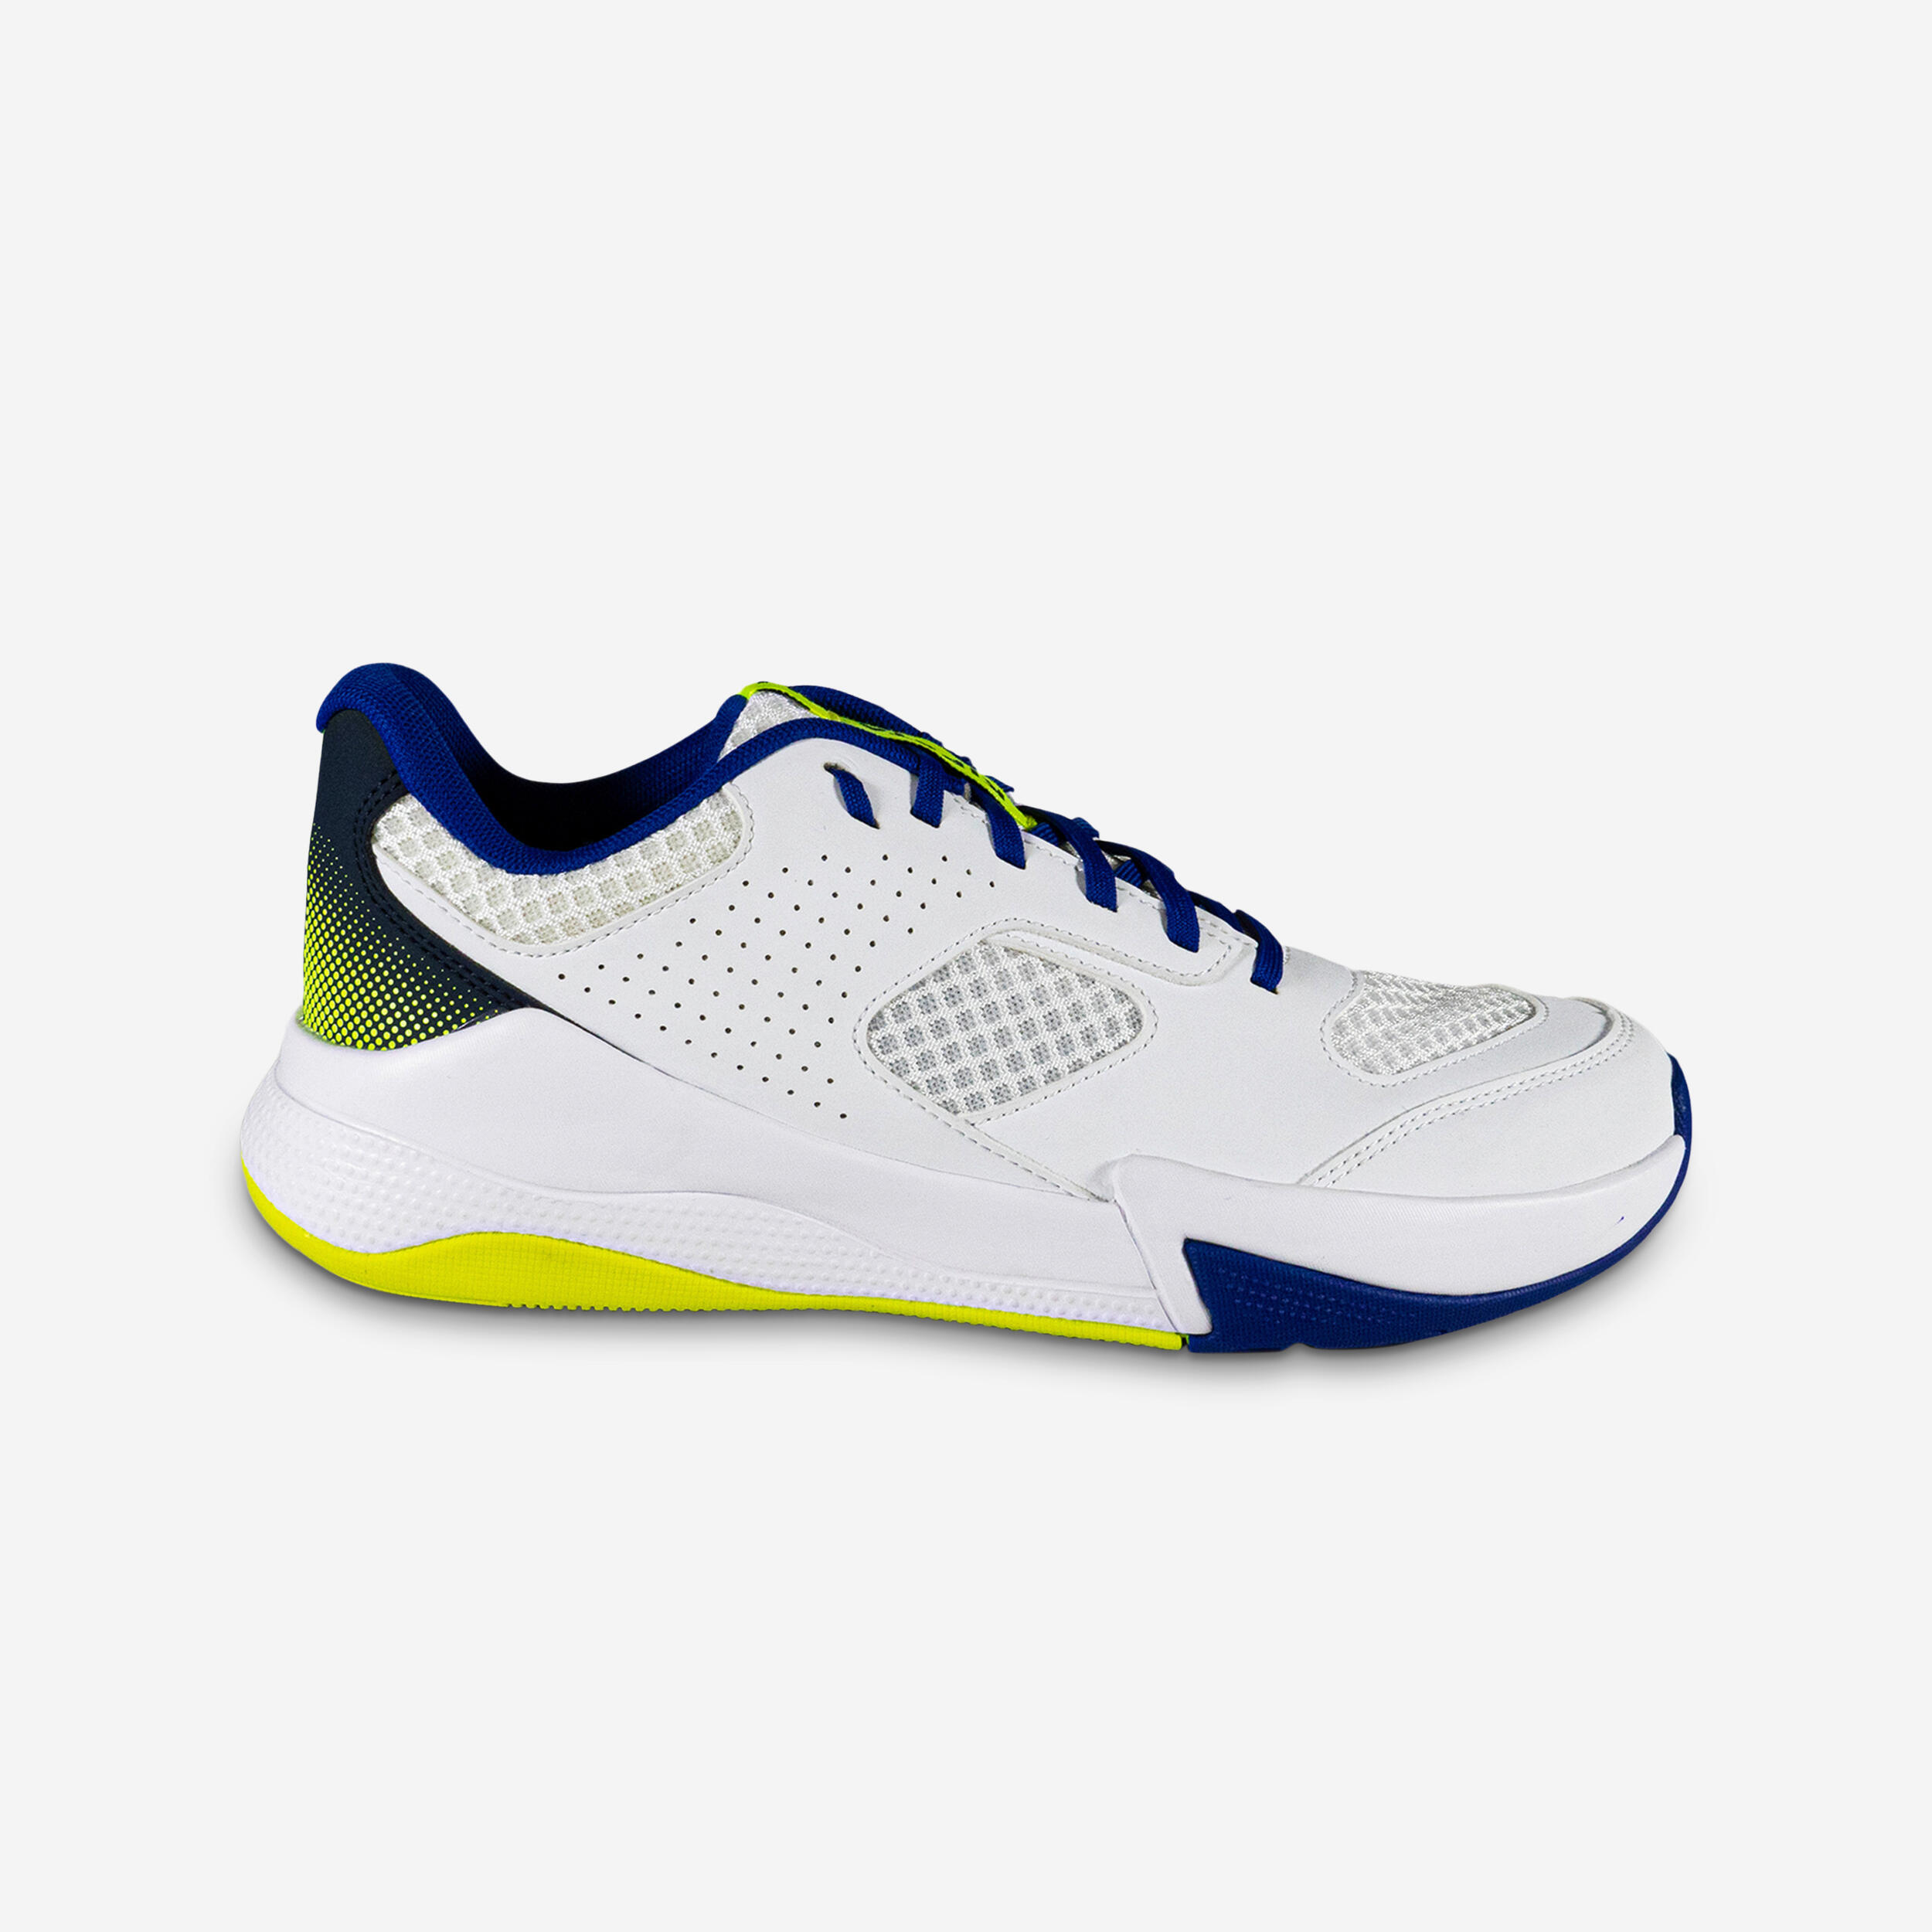 chaussure de volley-ball adulte confort blanche/bleu et jaune fluo. - allsix